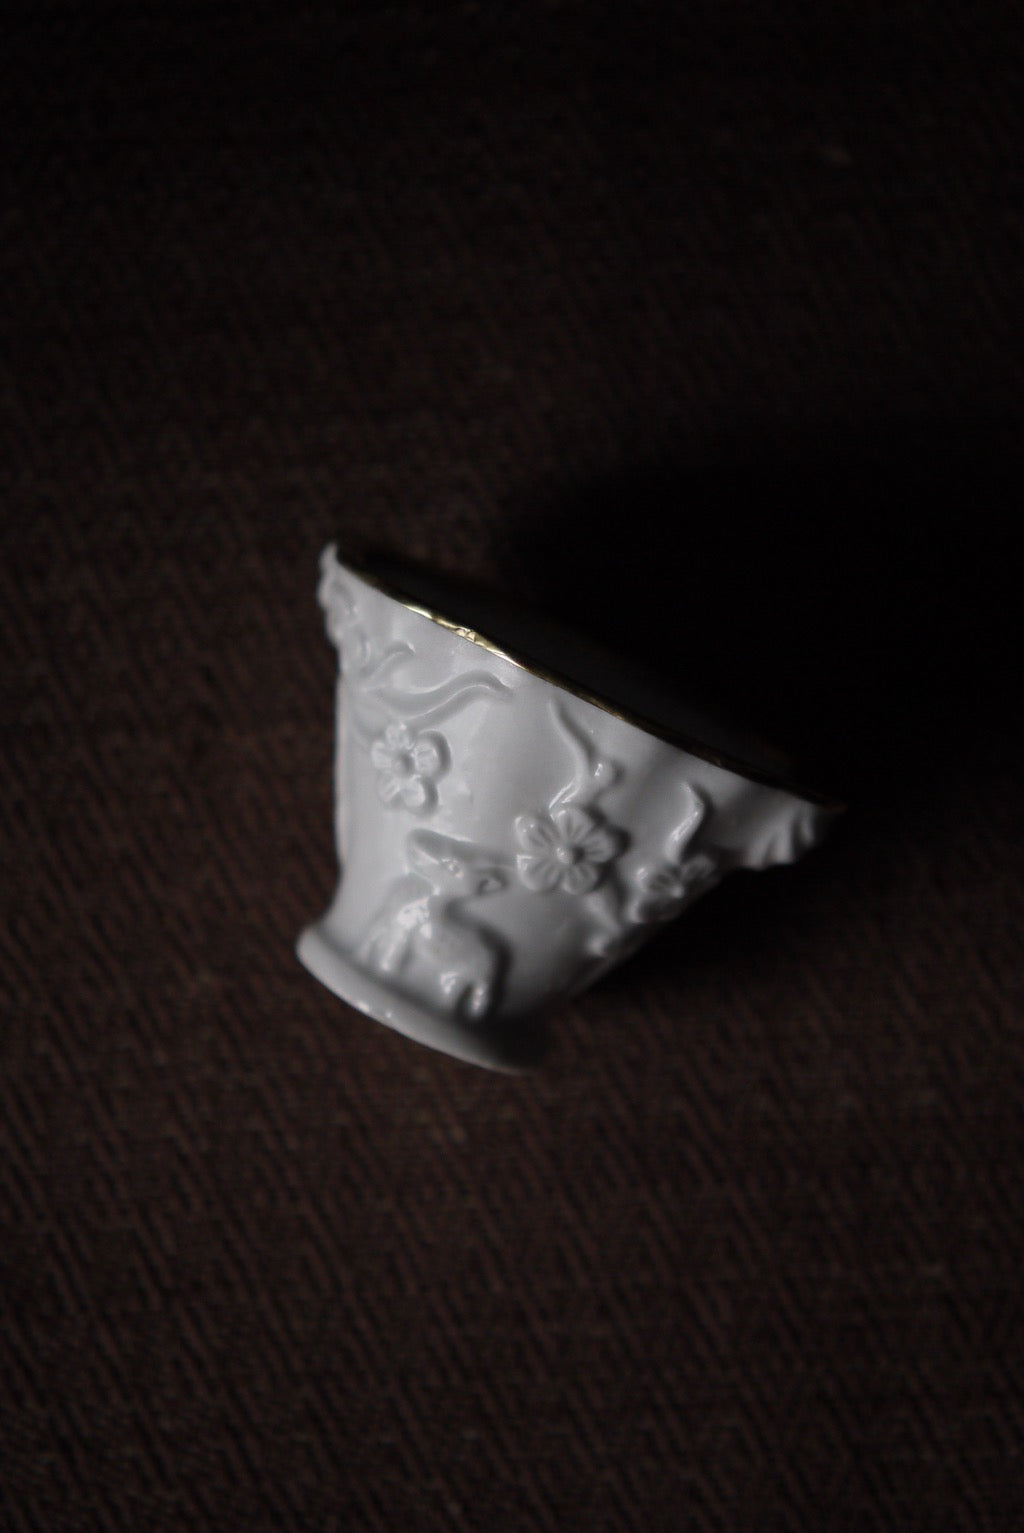 Special Blanc De Chine Gongfu Tea Ware Art Collection|Best Ceramics